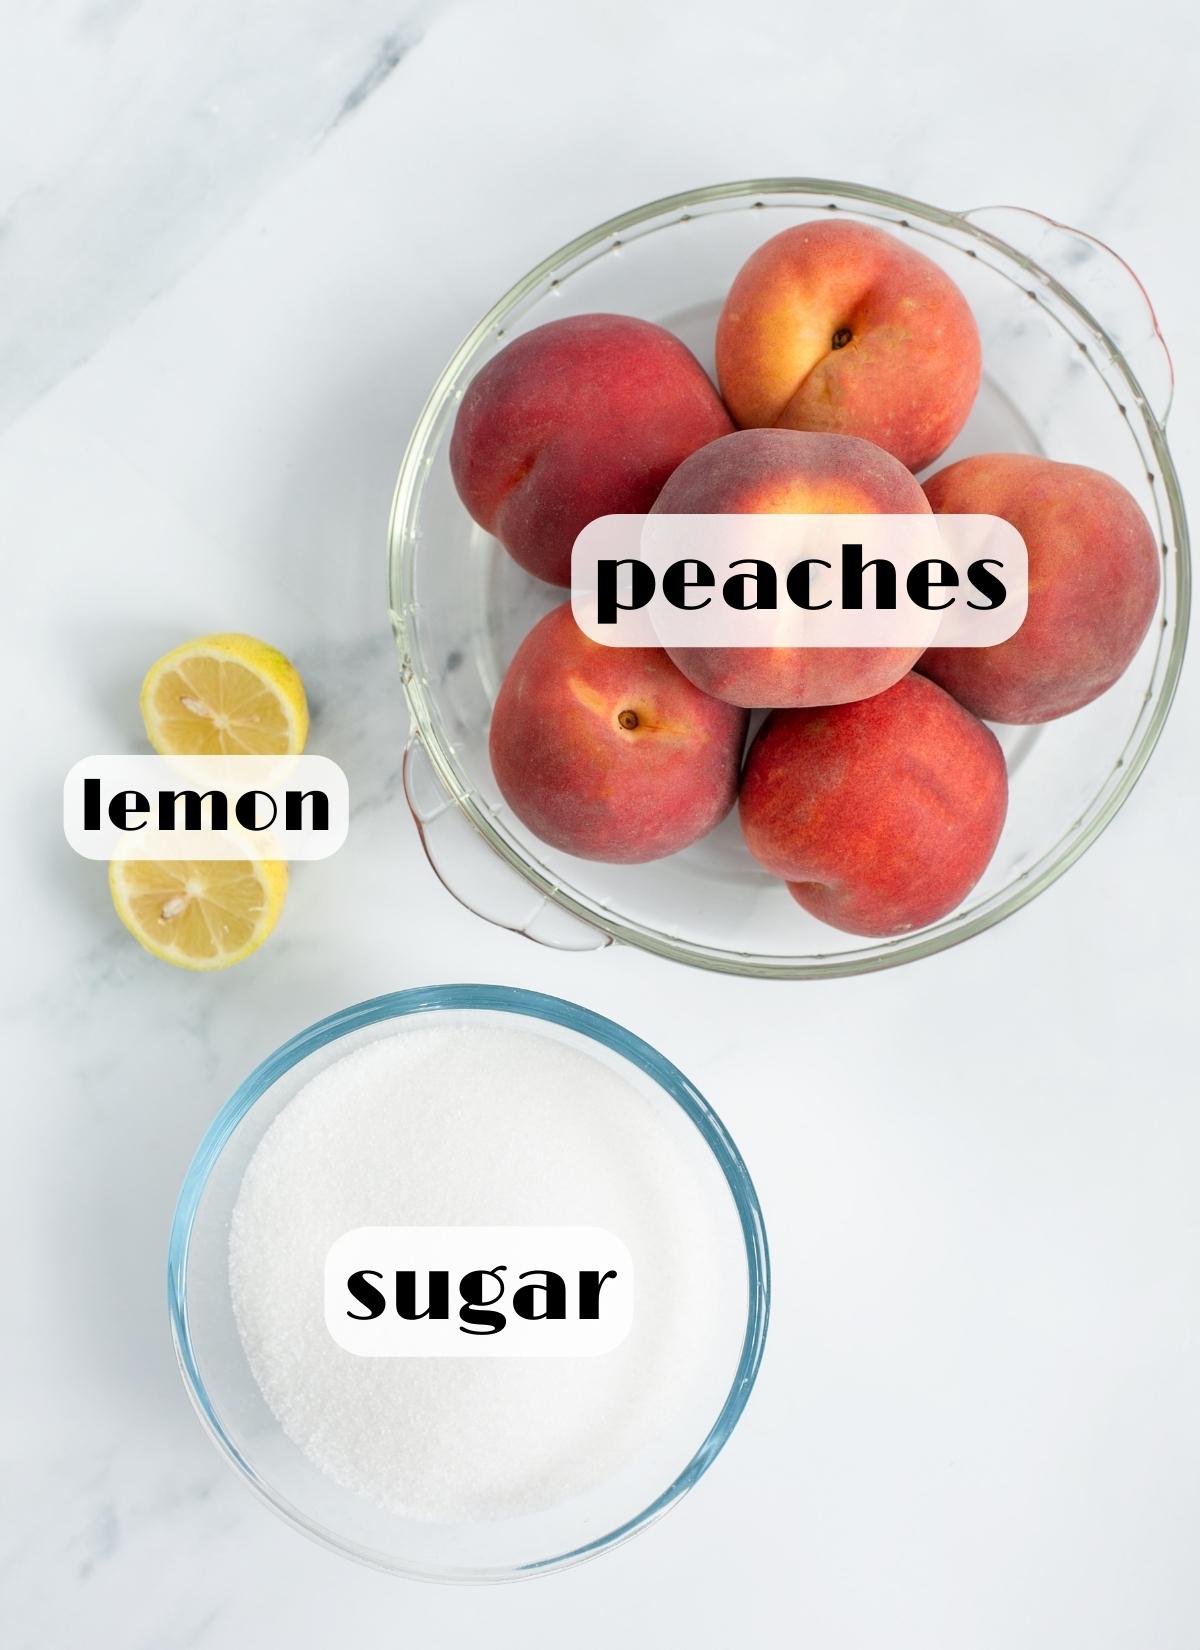 homemade peach jam ingredients: peaches, sugar, lemon.